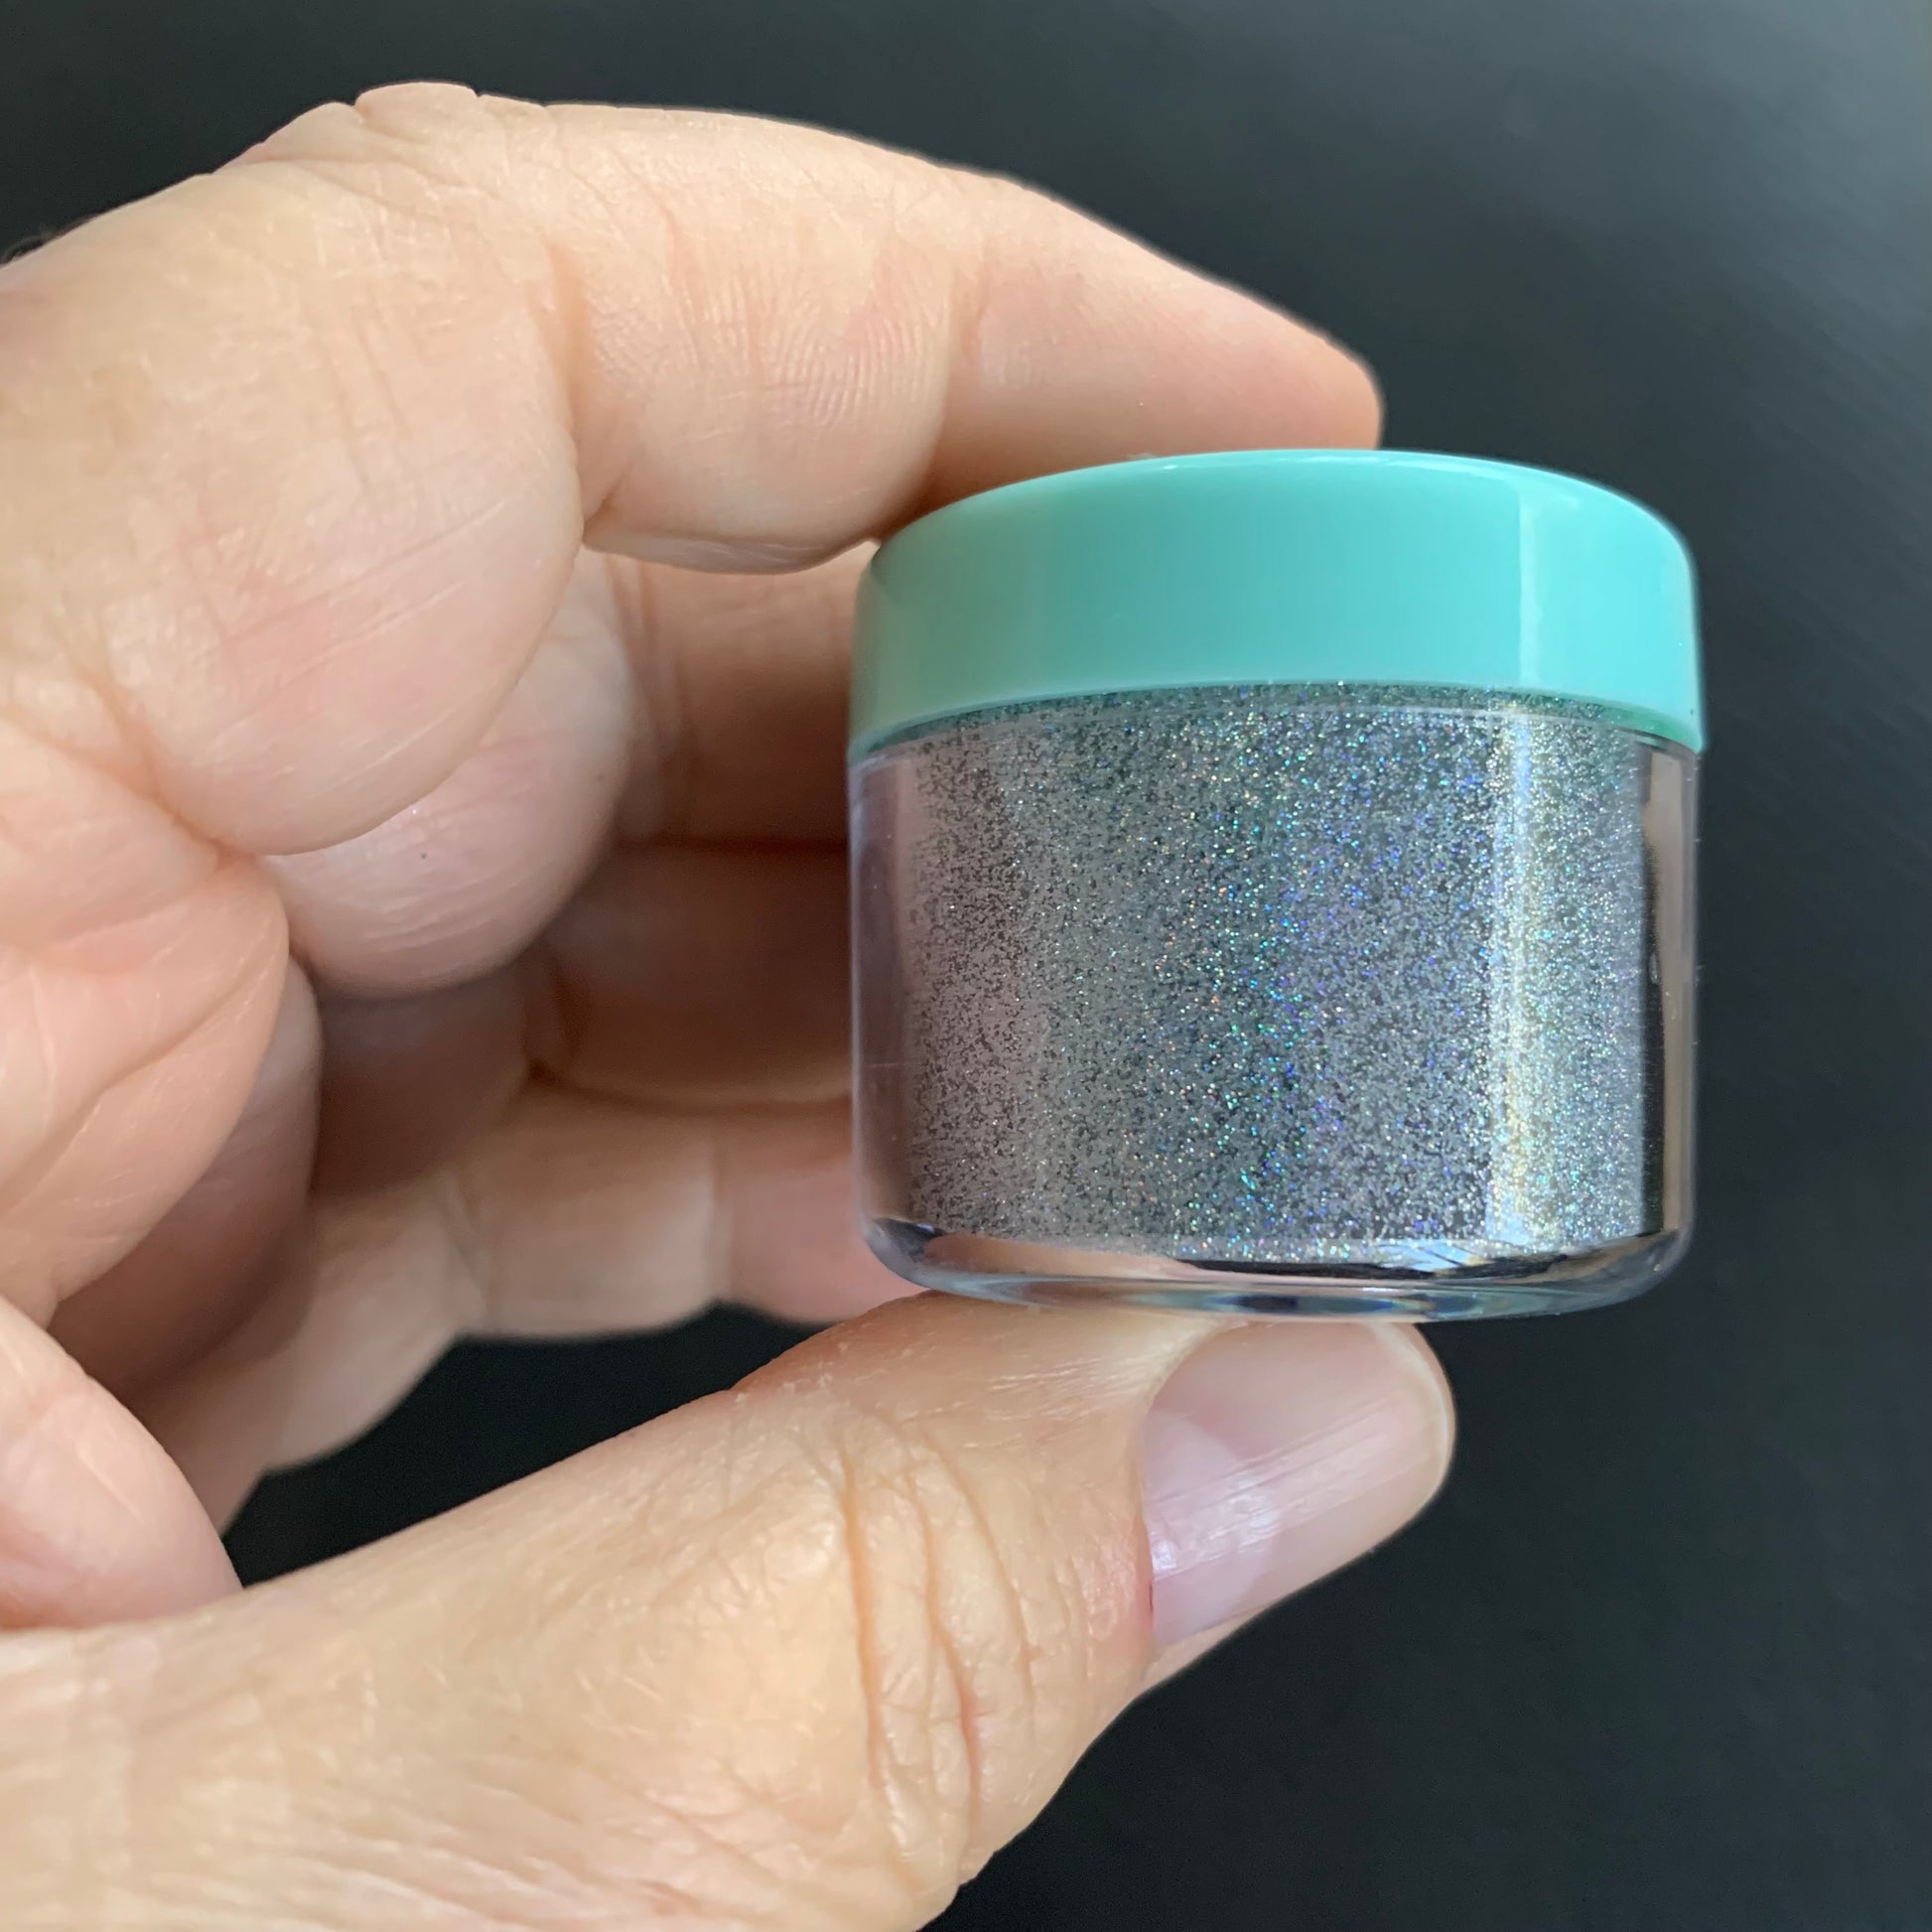 Ultra Fine Glitter Holographic (bulk): Discotheque